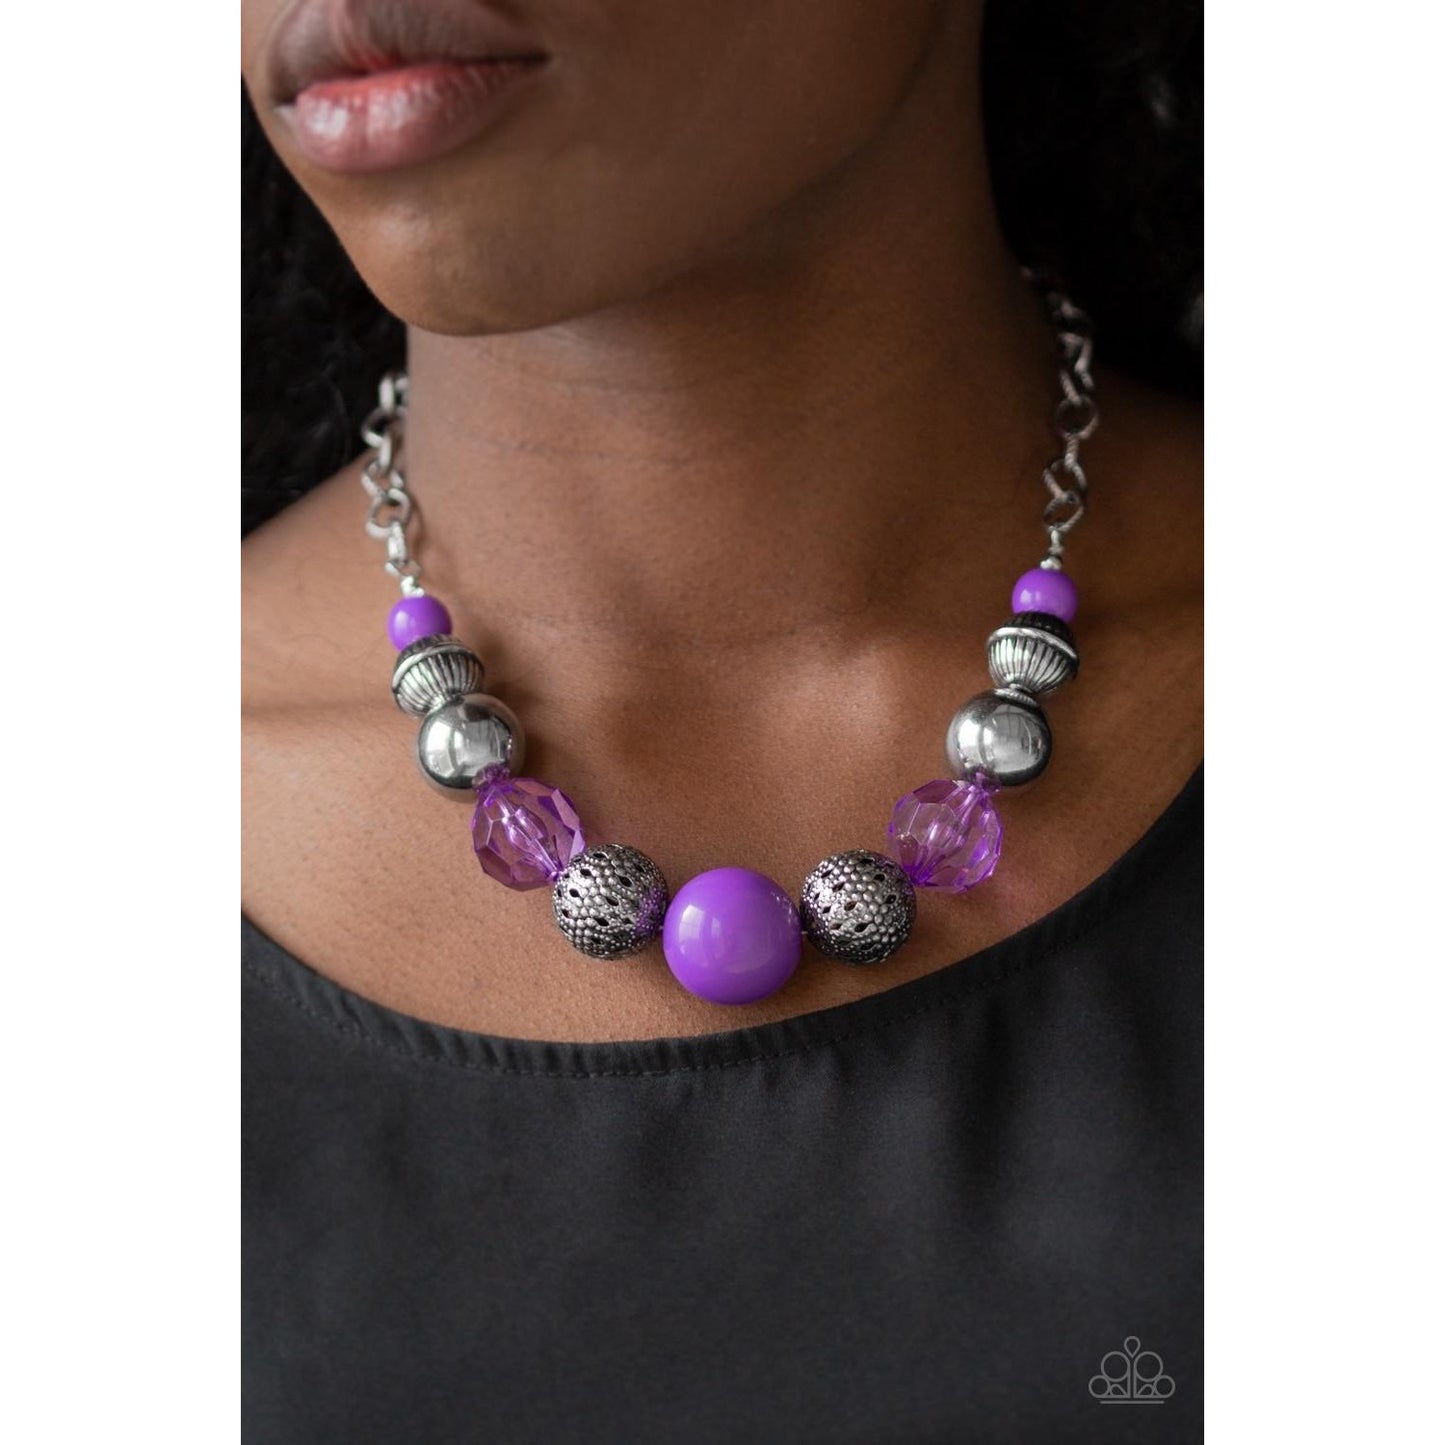 Sugar, Sugar - Purple Necklace Earrings 2045